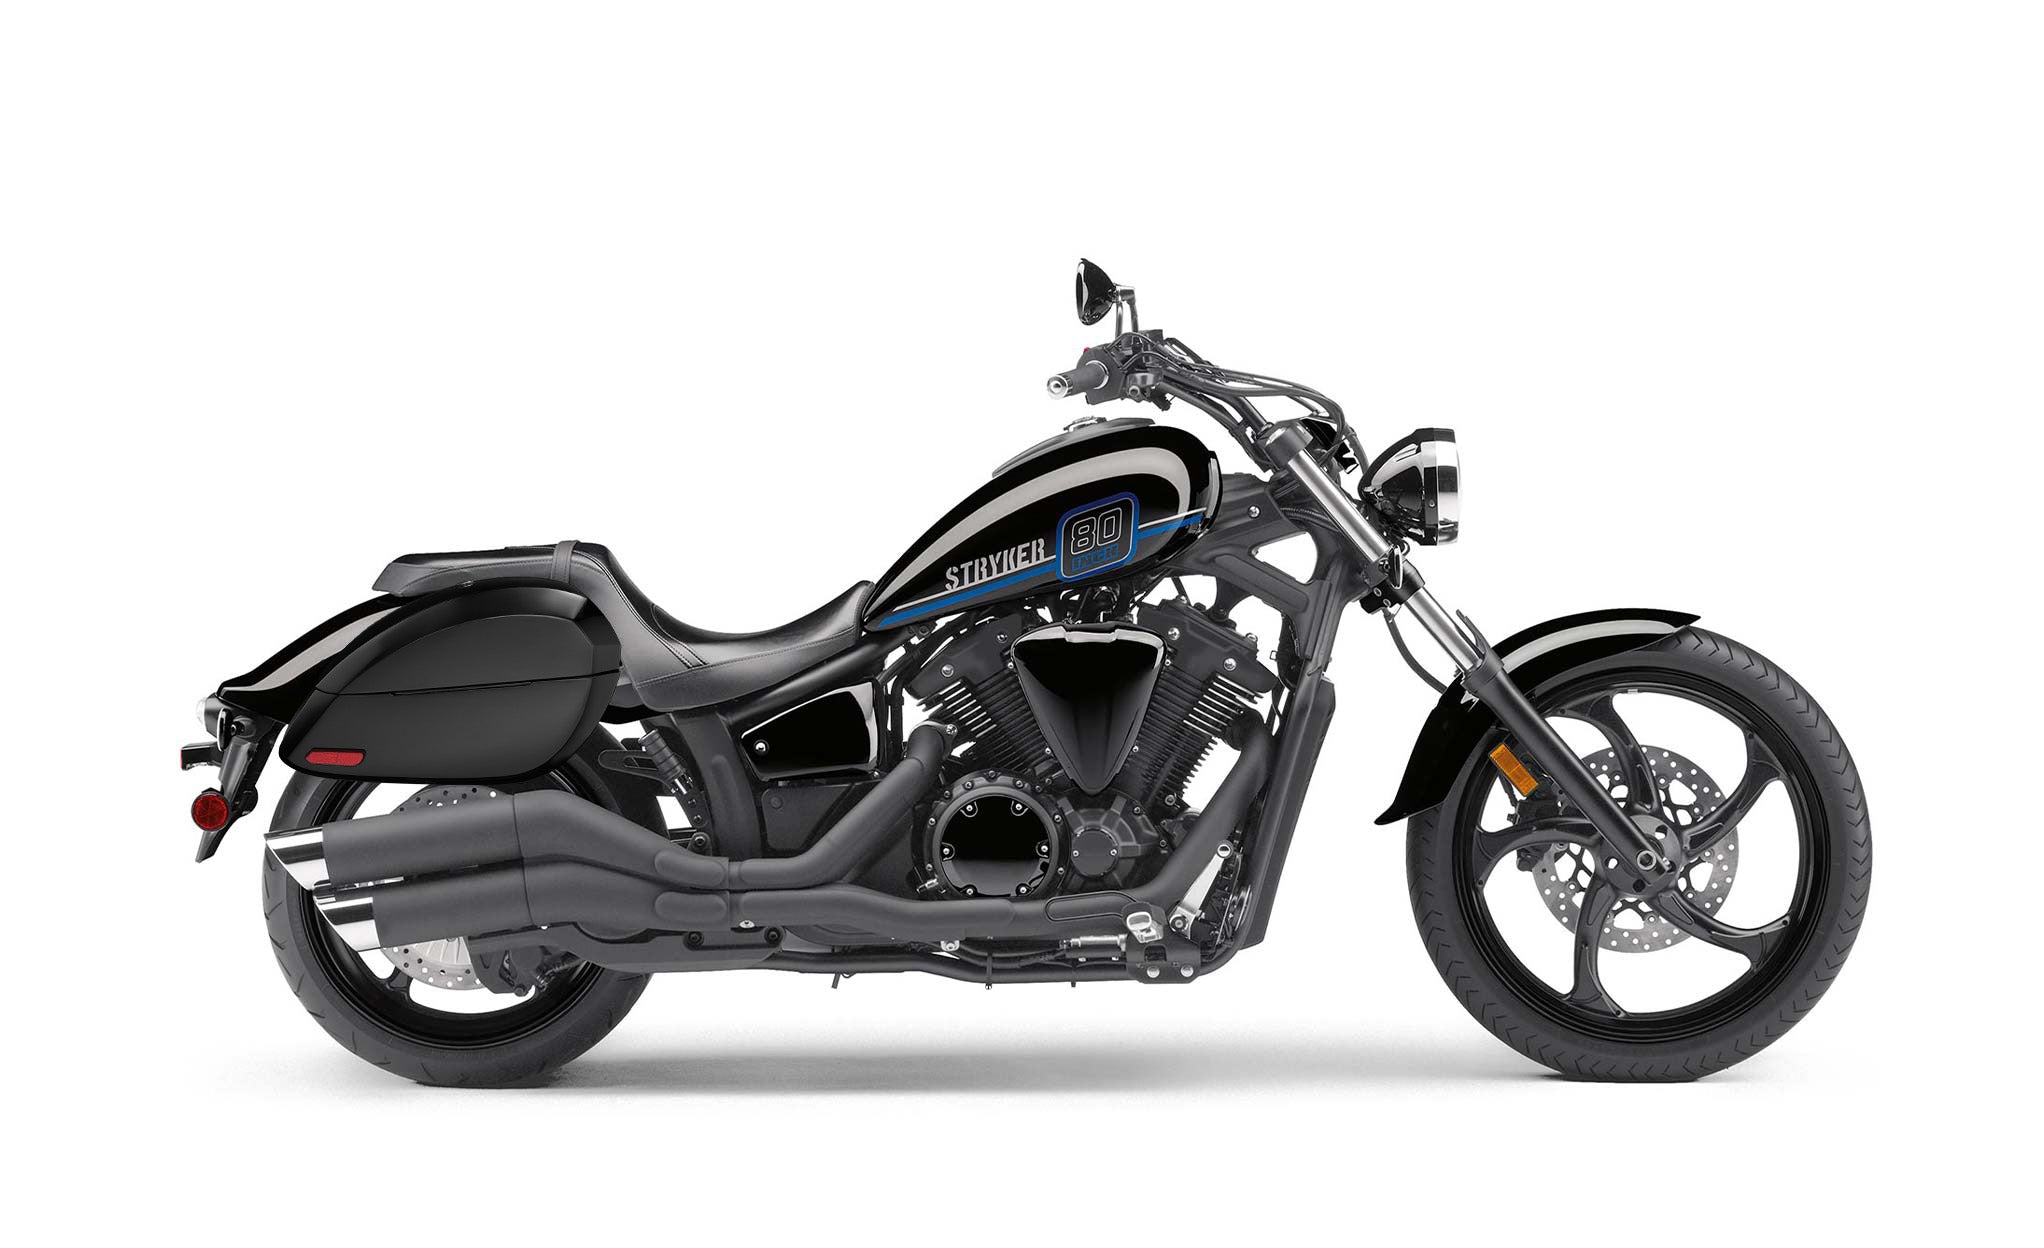 Viking Phantom Large Yamaha Stryker Painted Motorcycle Hard Saddlebags Engineering Excellence with Bag on Bike @expand